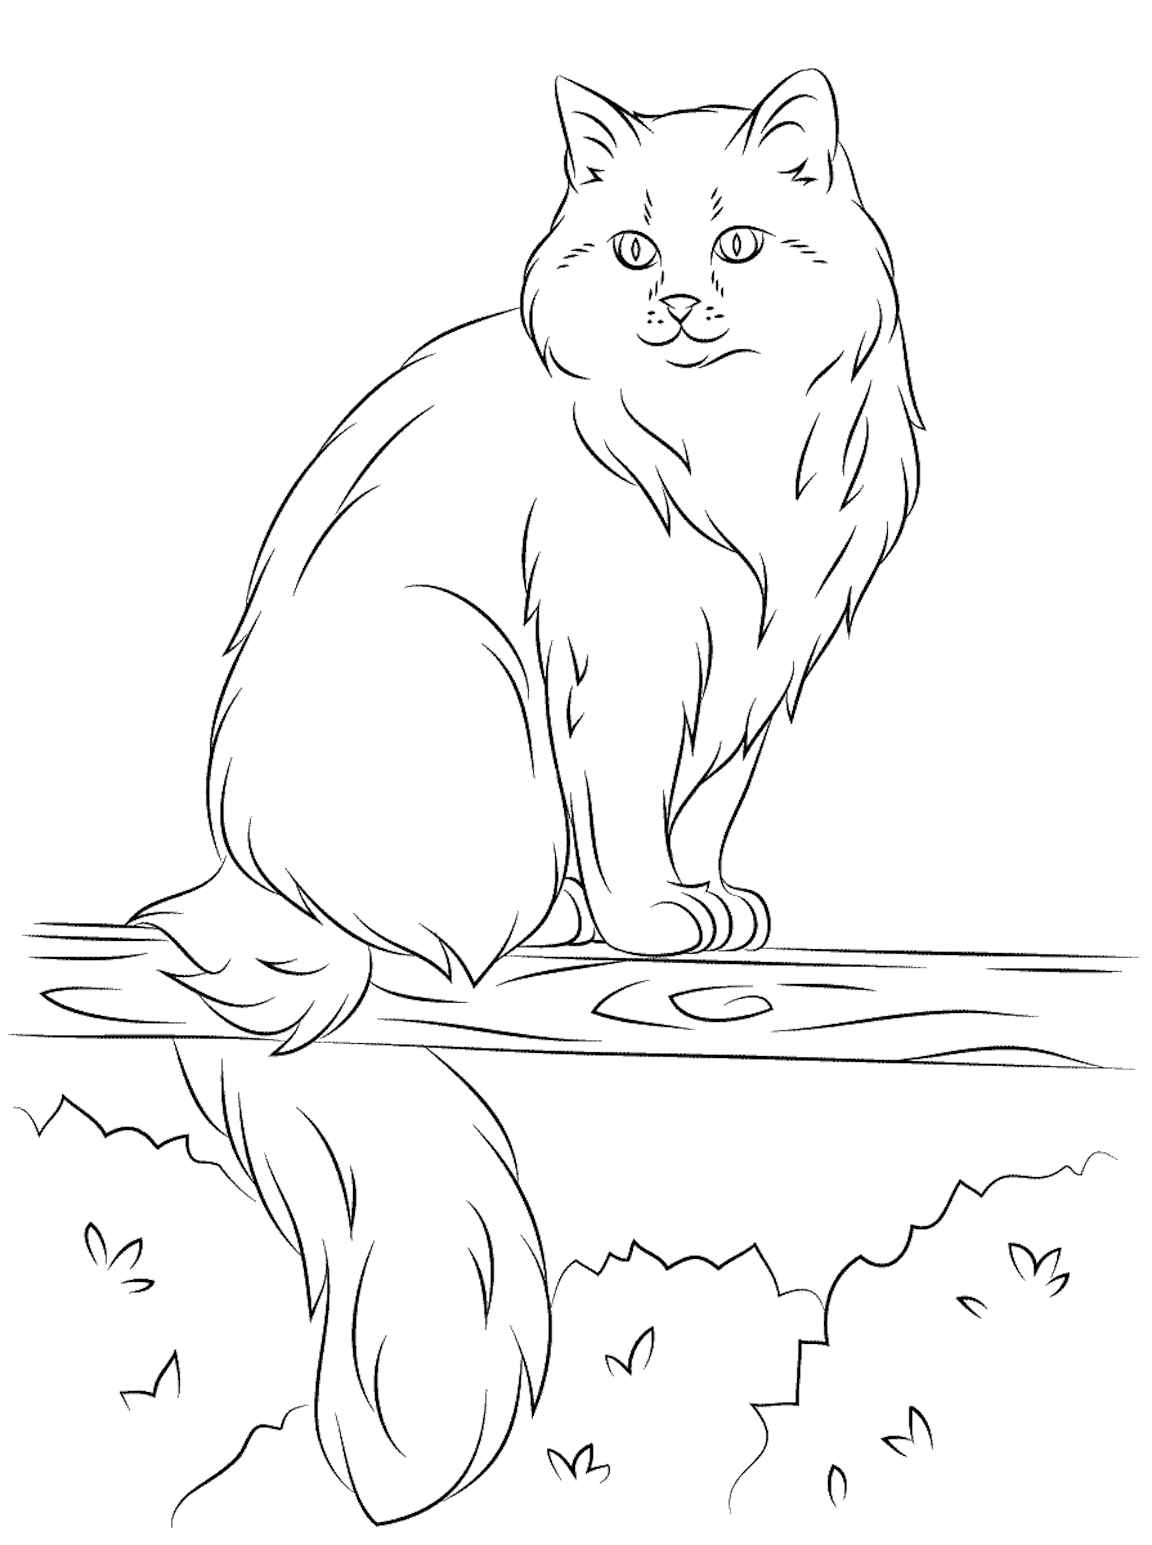 Кот баюн рисунок карандашом - 76 фото